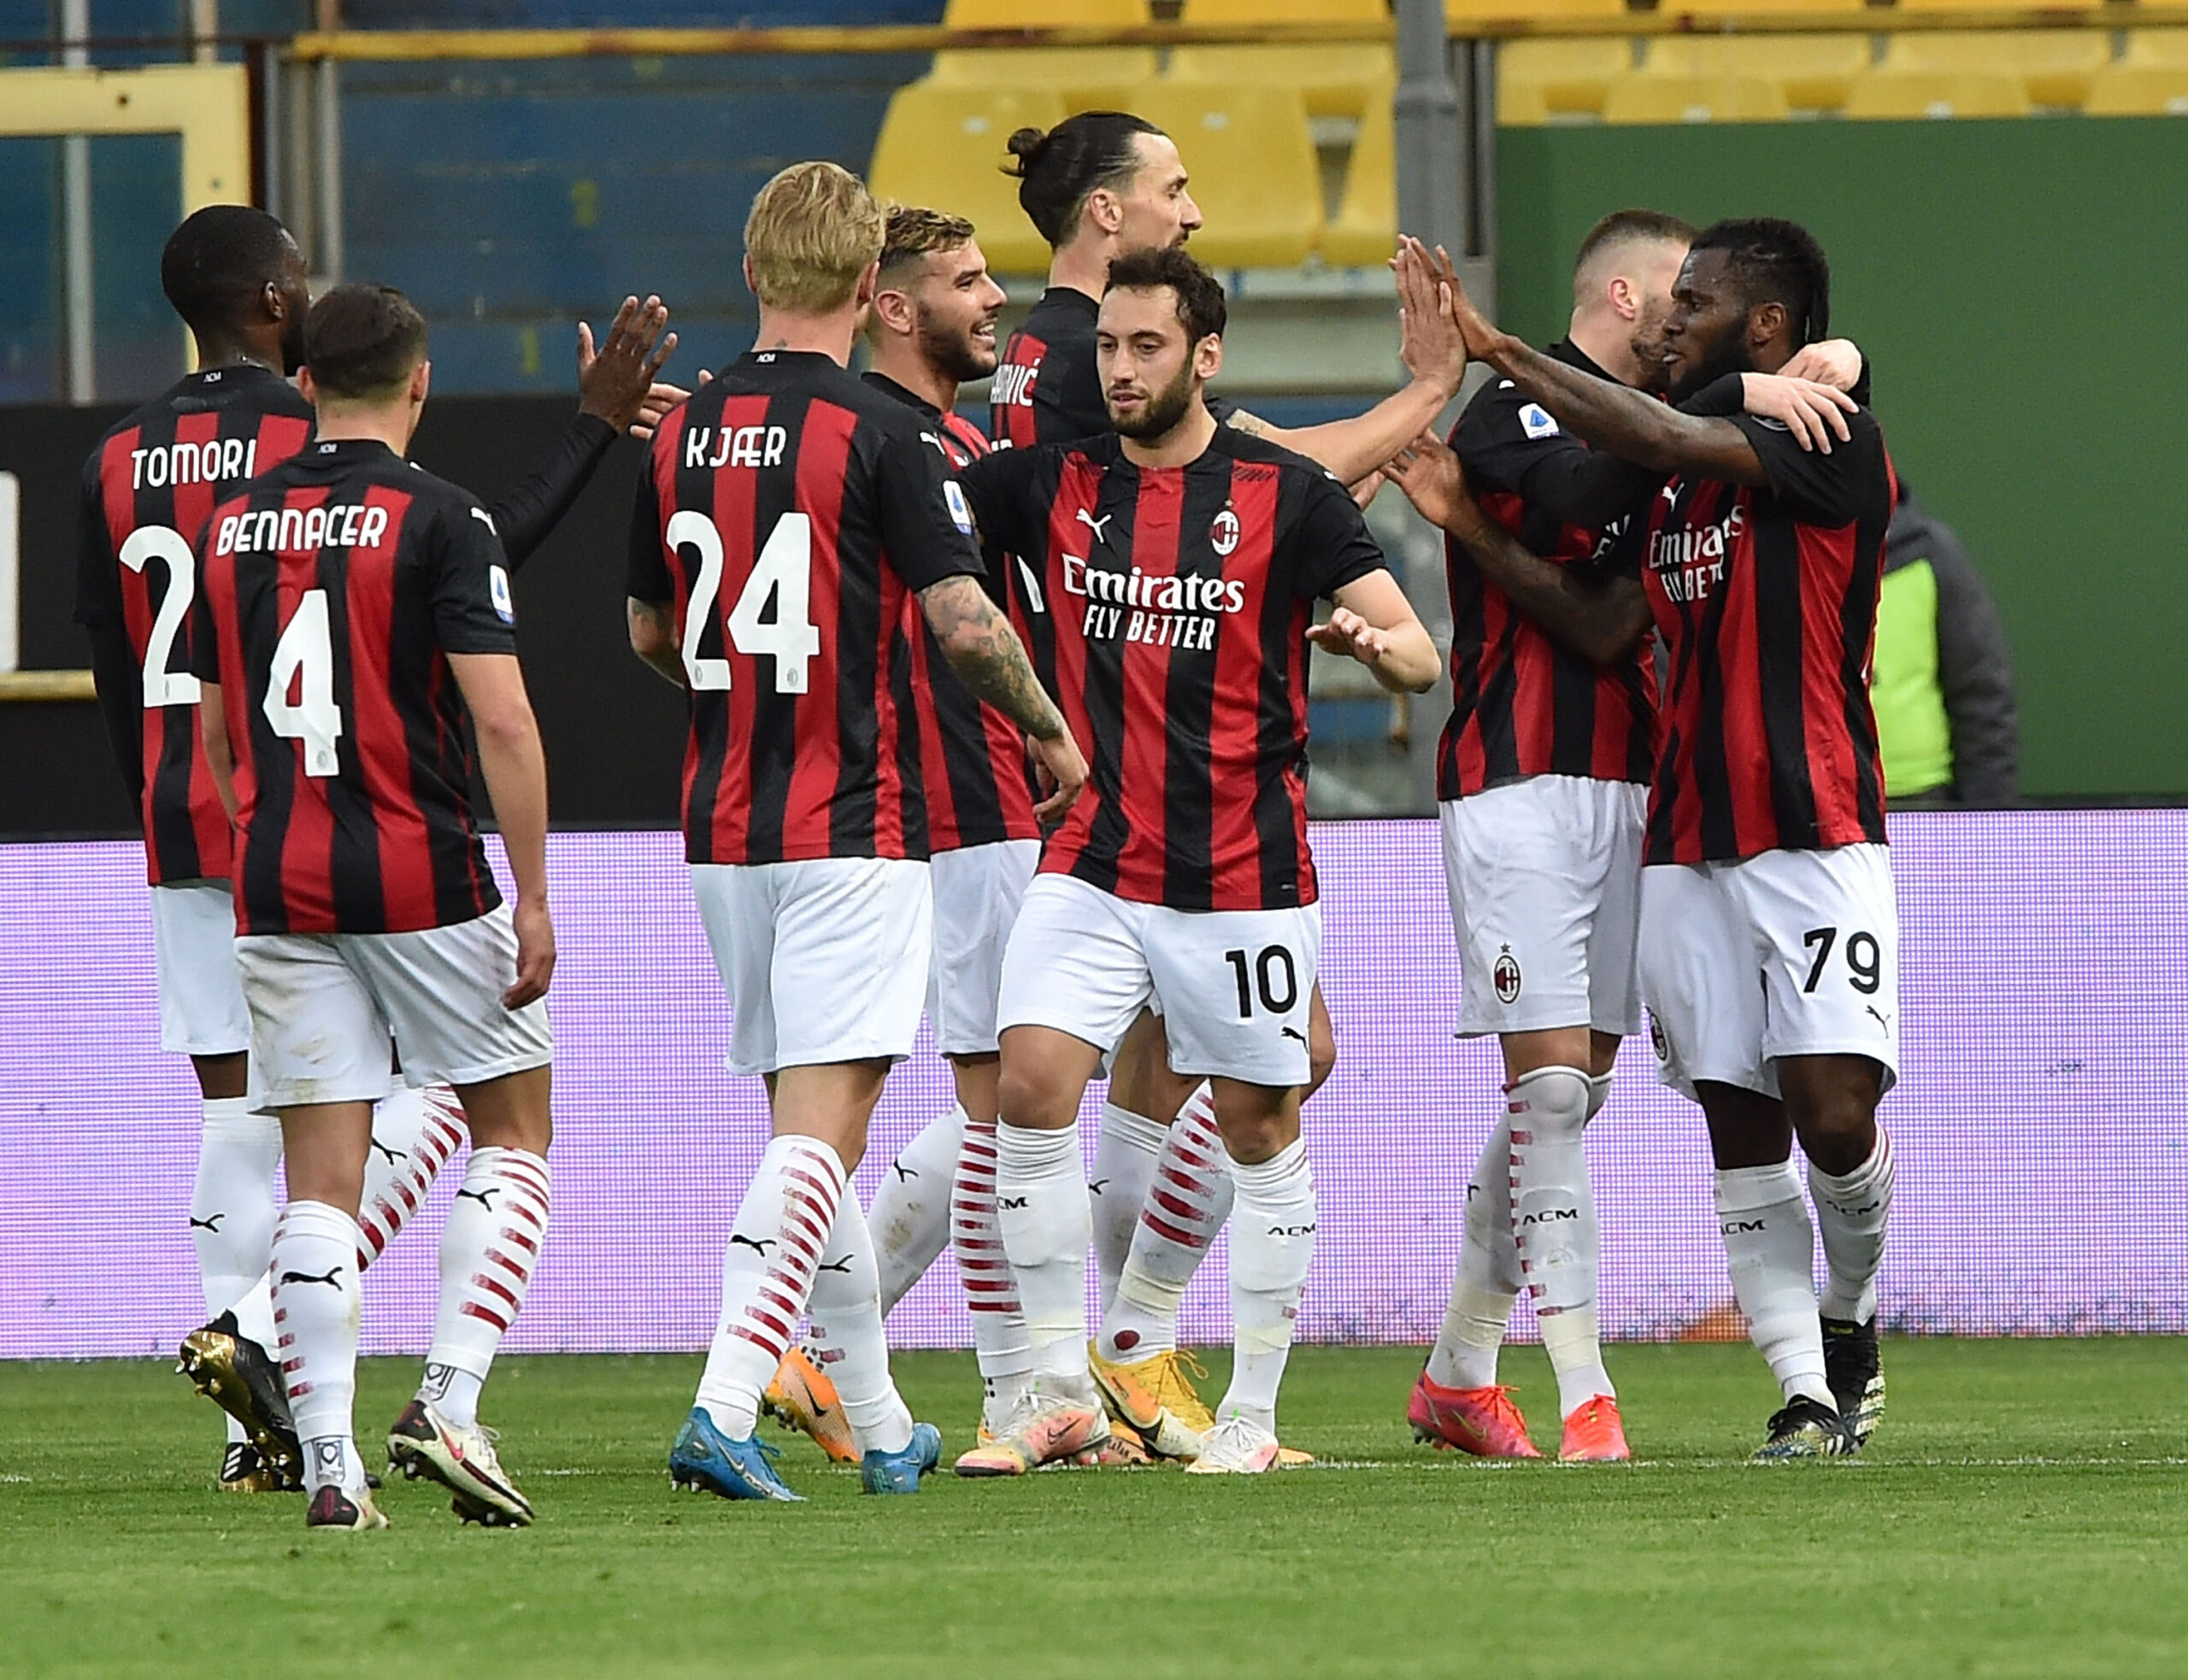 Milan corsaro al “Tardini”: 1-3 e Champions blindata